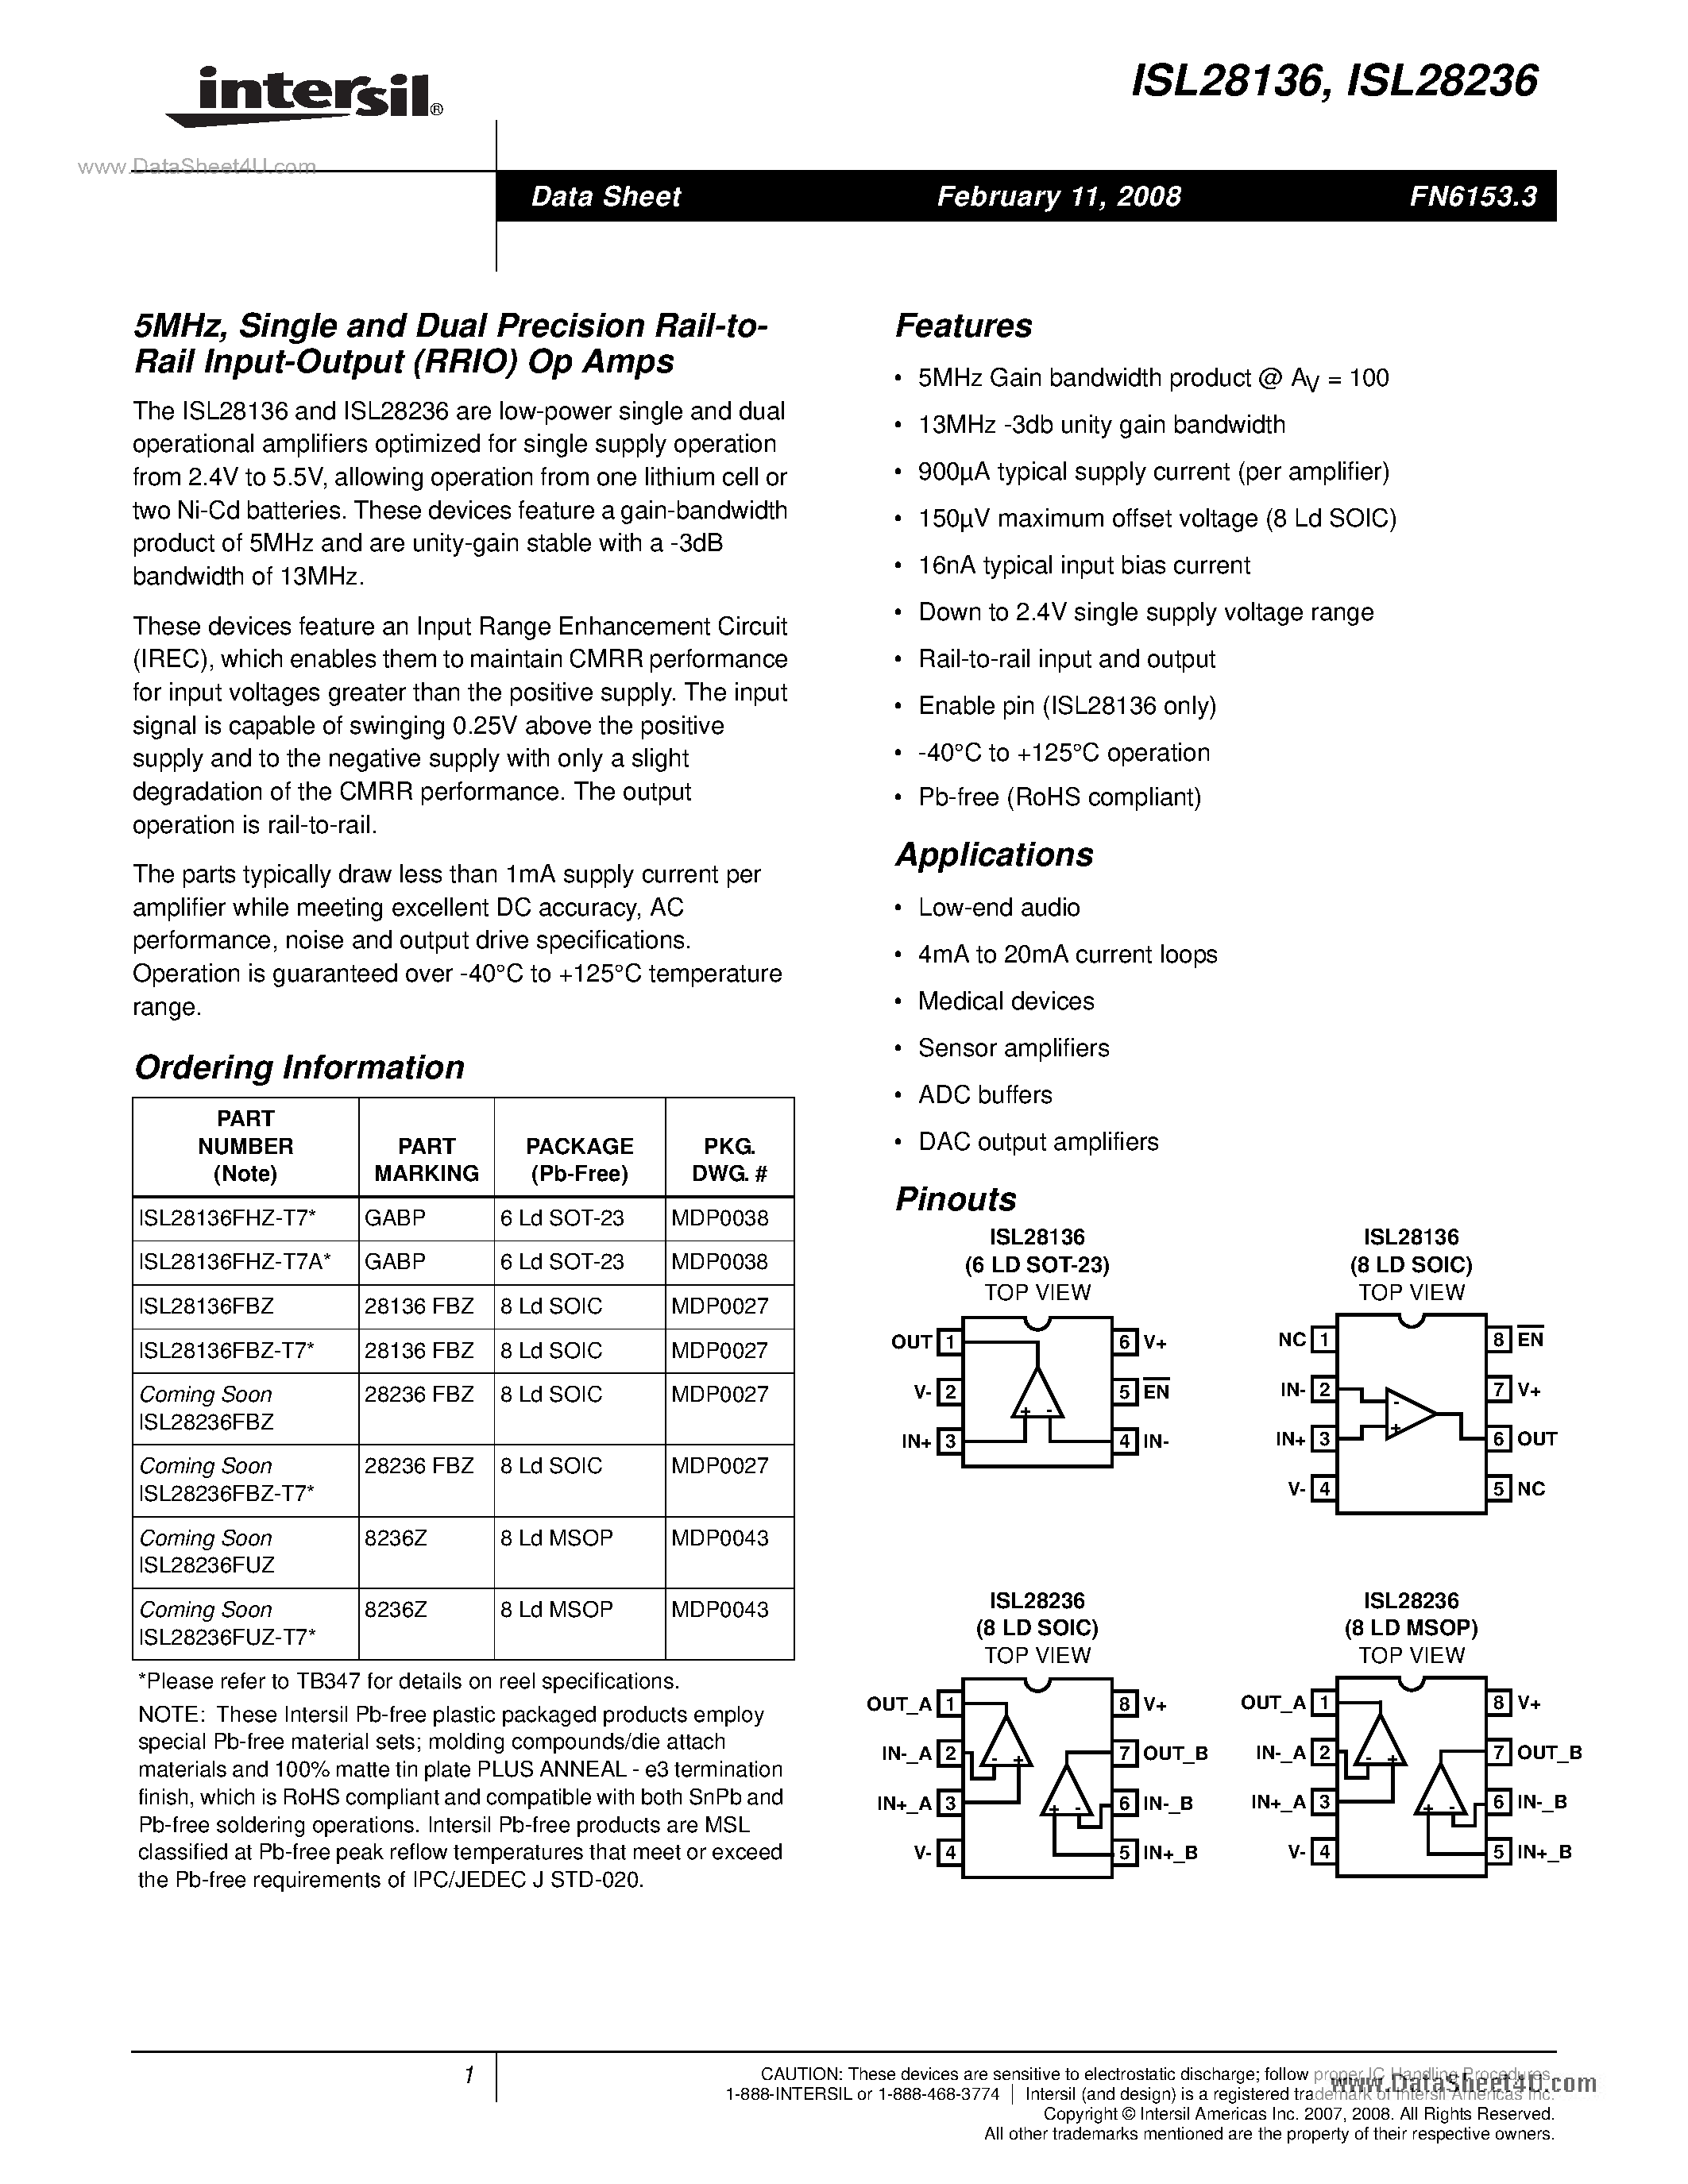 Даташит ISL28236-(ISL28136 / ISL28236) Single and Dual Precision Rail-to-Rail Input-Output (RRIO) Op Amps страница 1